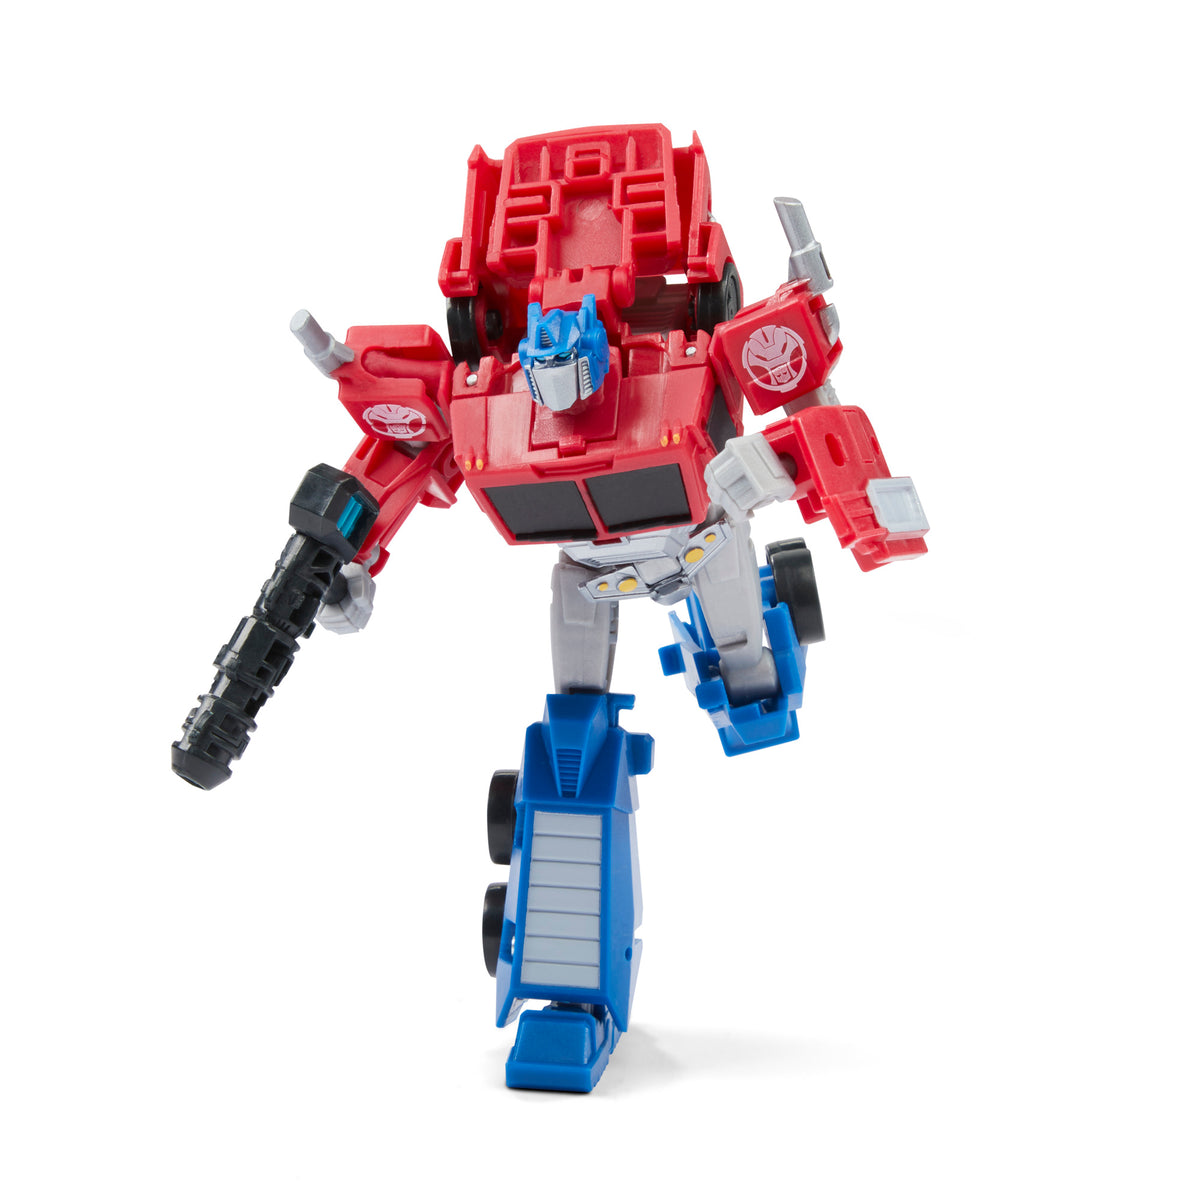 Transformers Toys EarthSpark Warrior Class Optimus Prime Action